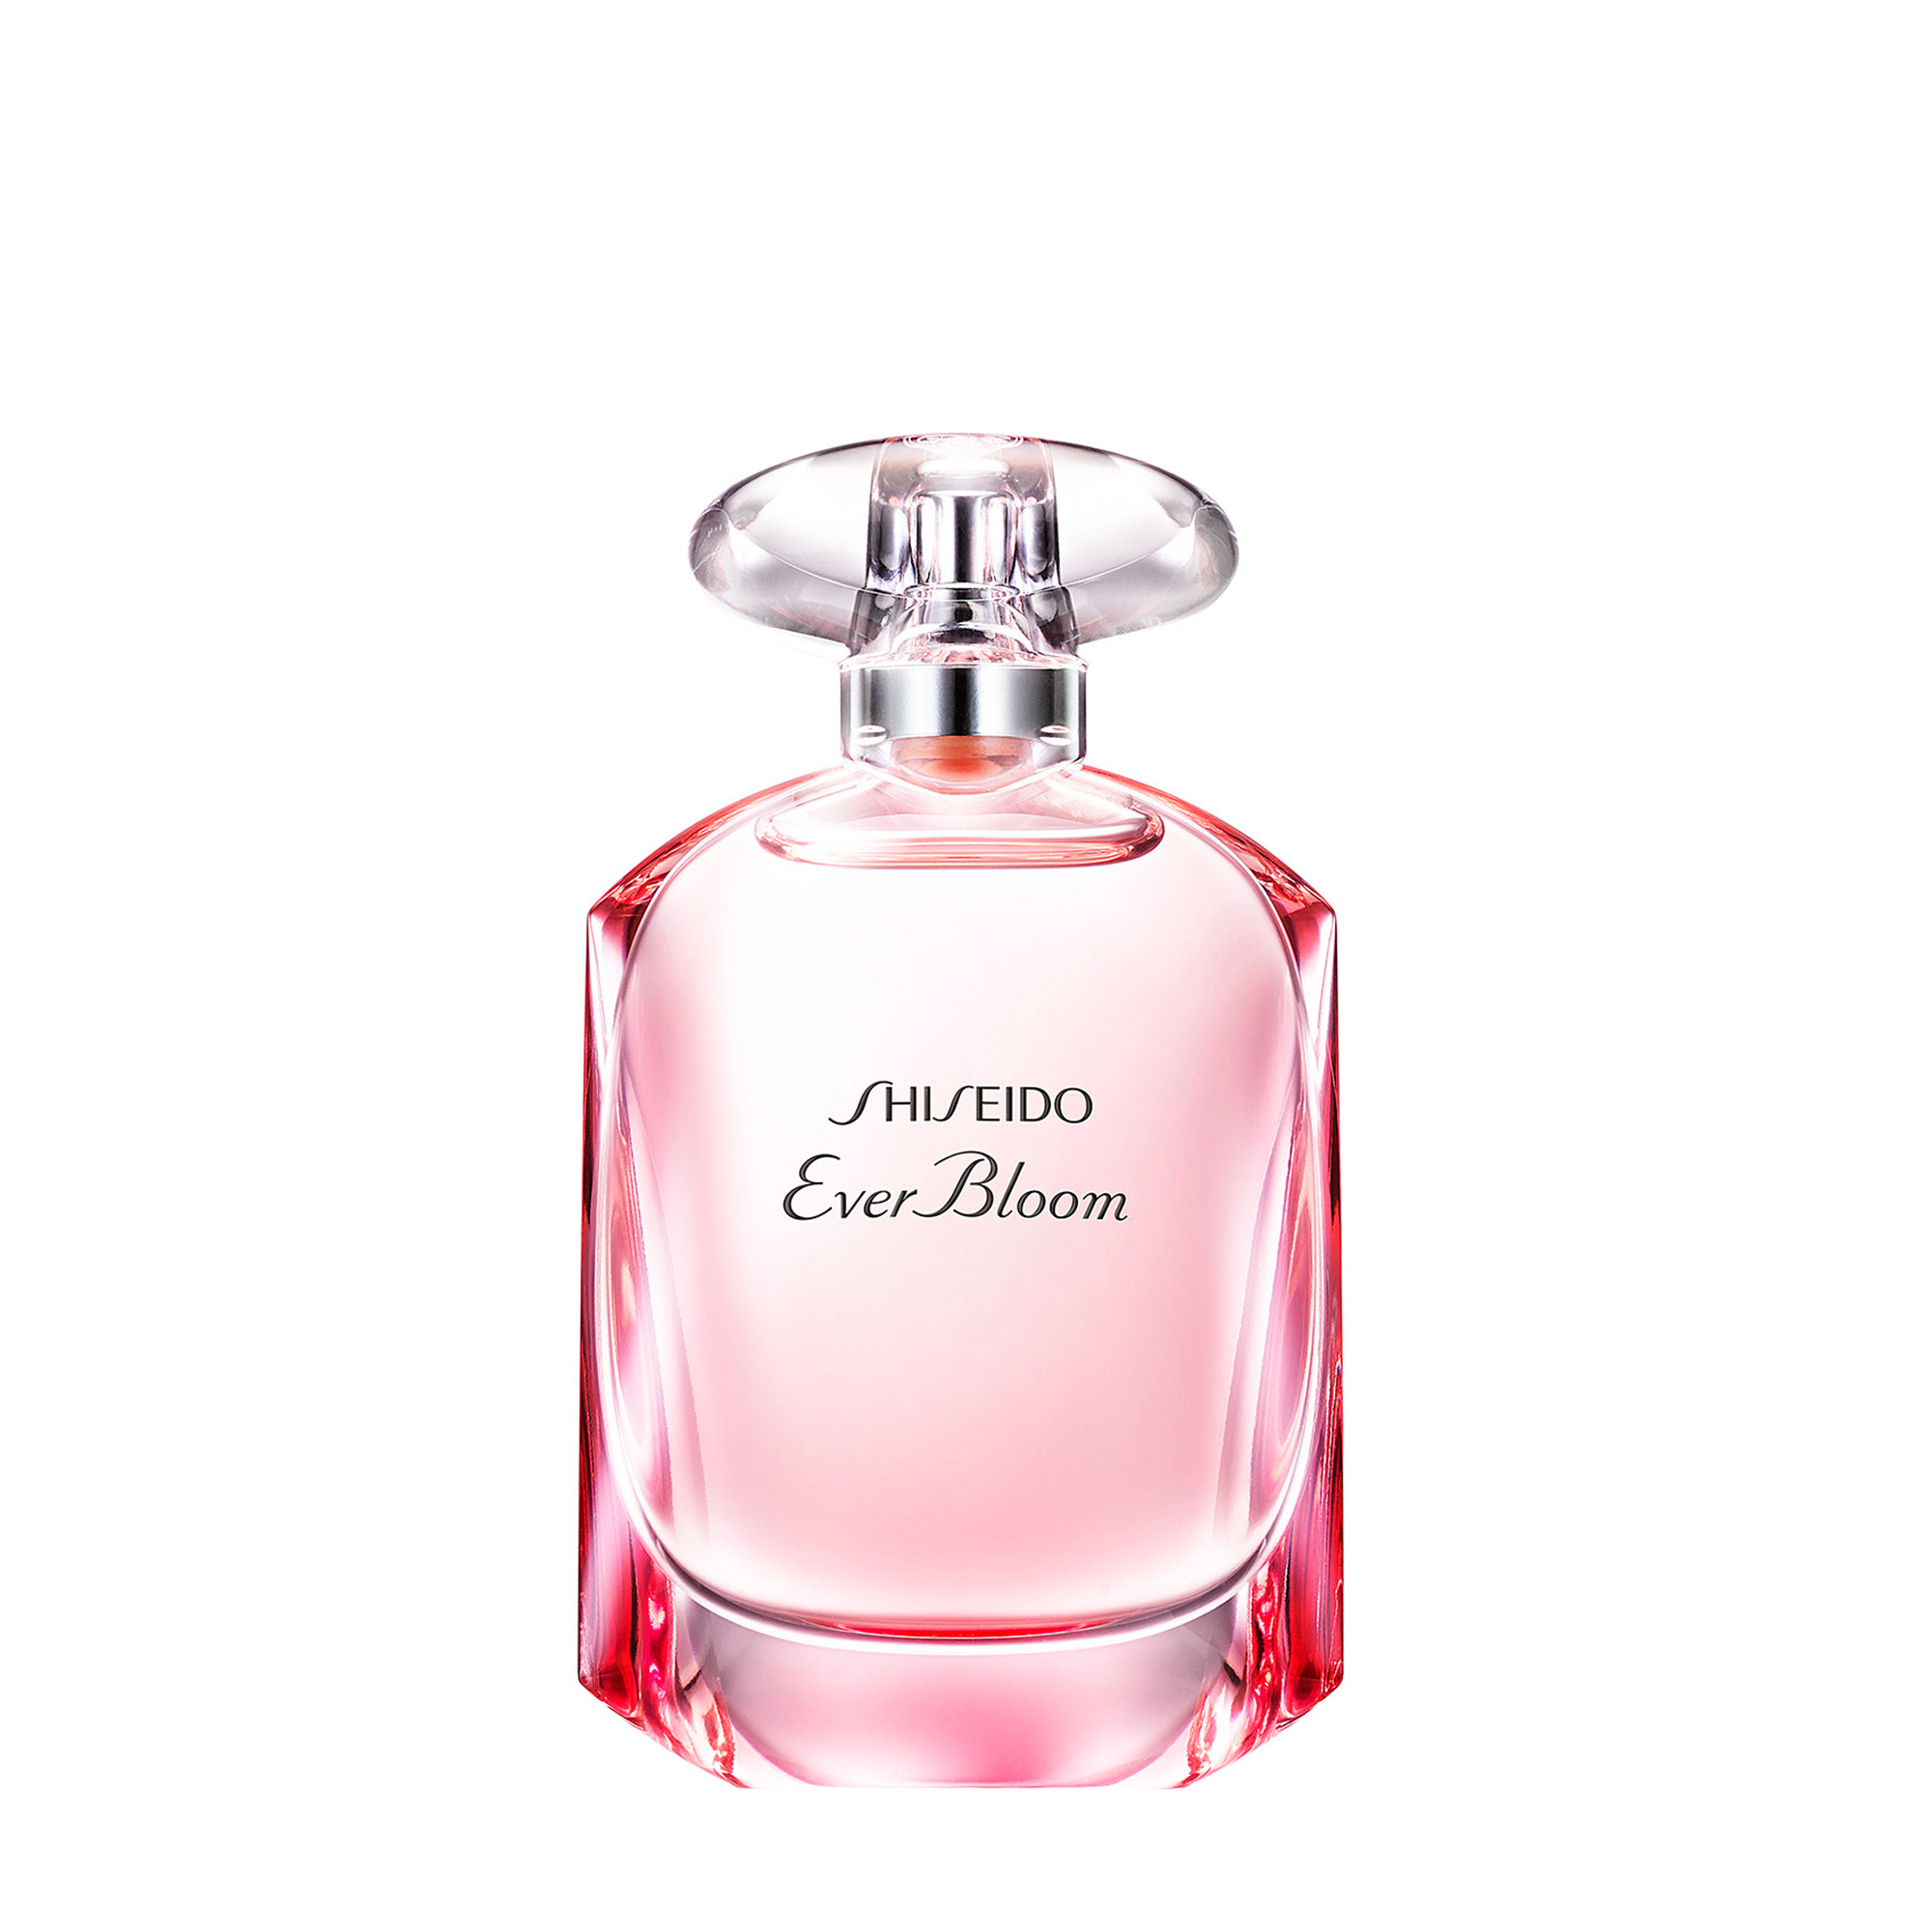 ever bloom perfume